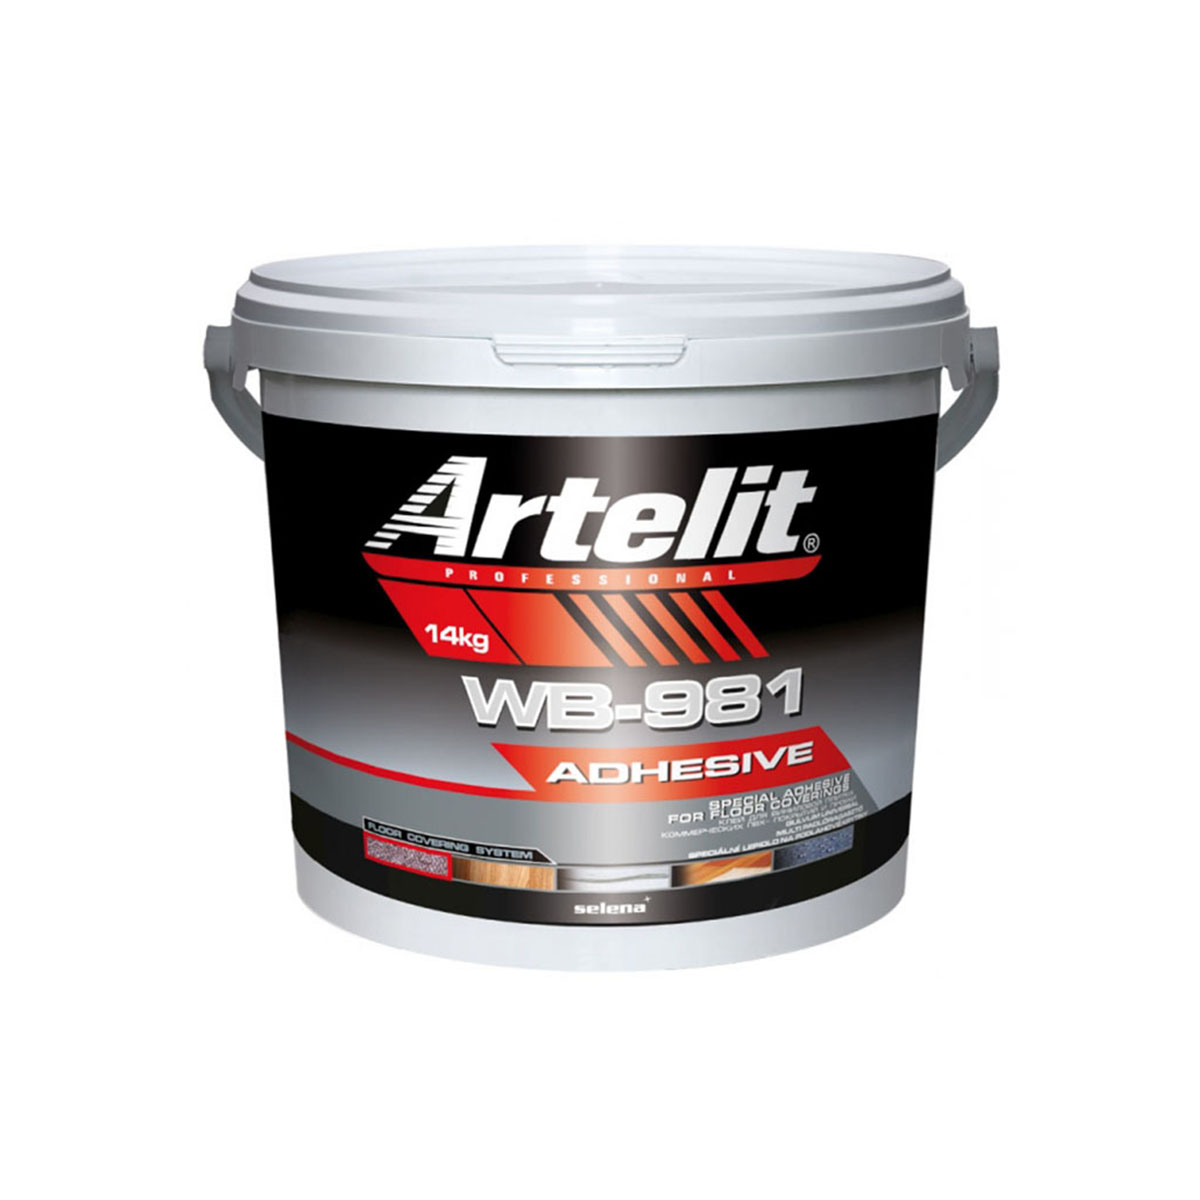 Artelit WB 982      